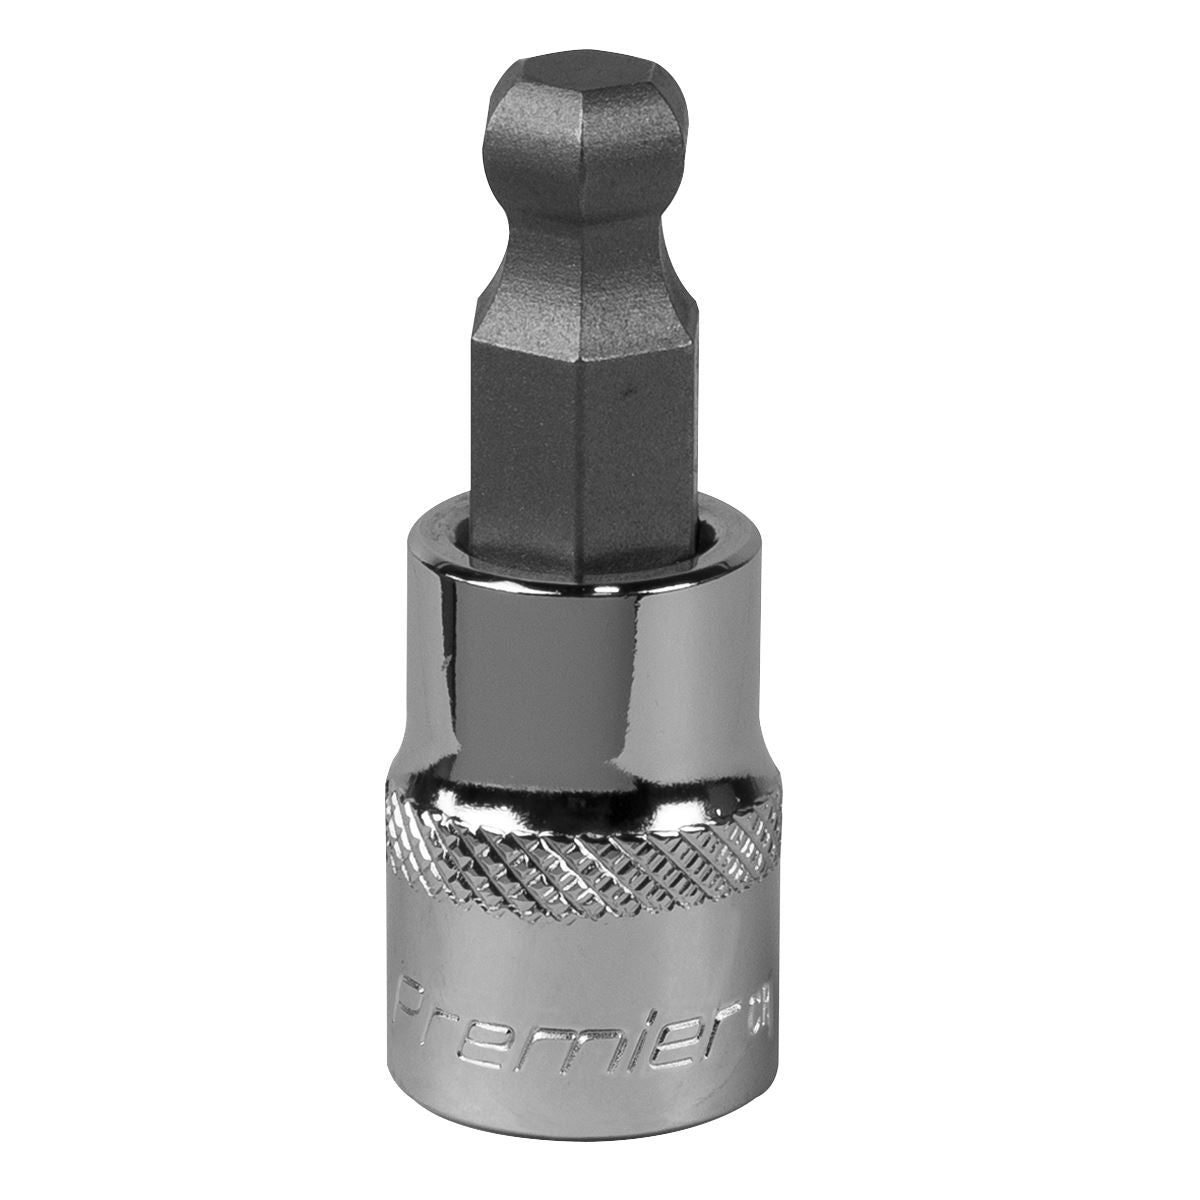 Sealey Premier Ball-End Hex Socket Bit 9mm 3/8"Sq Drive